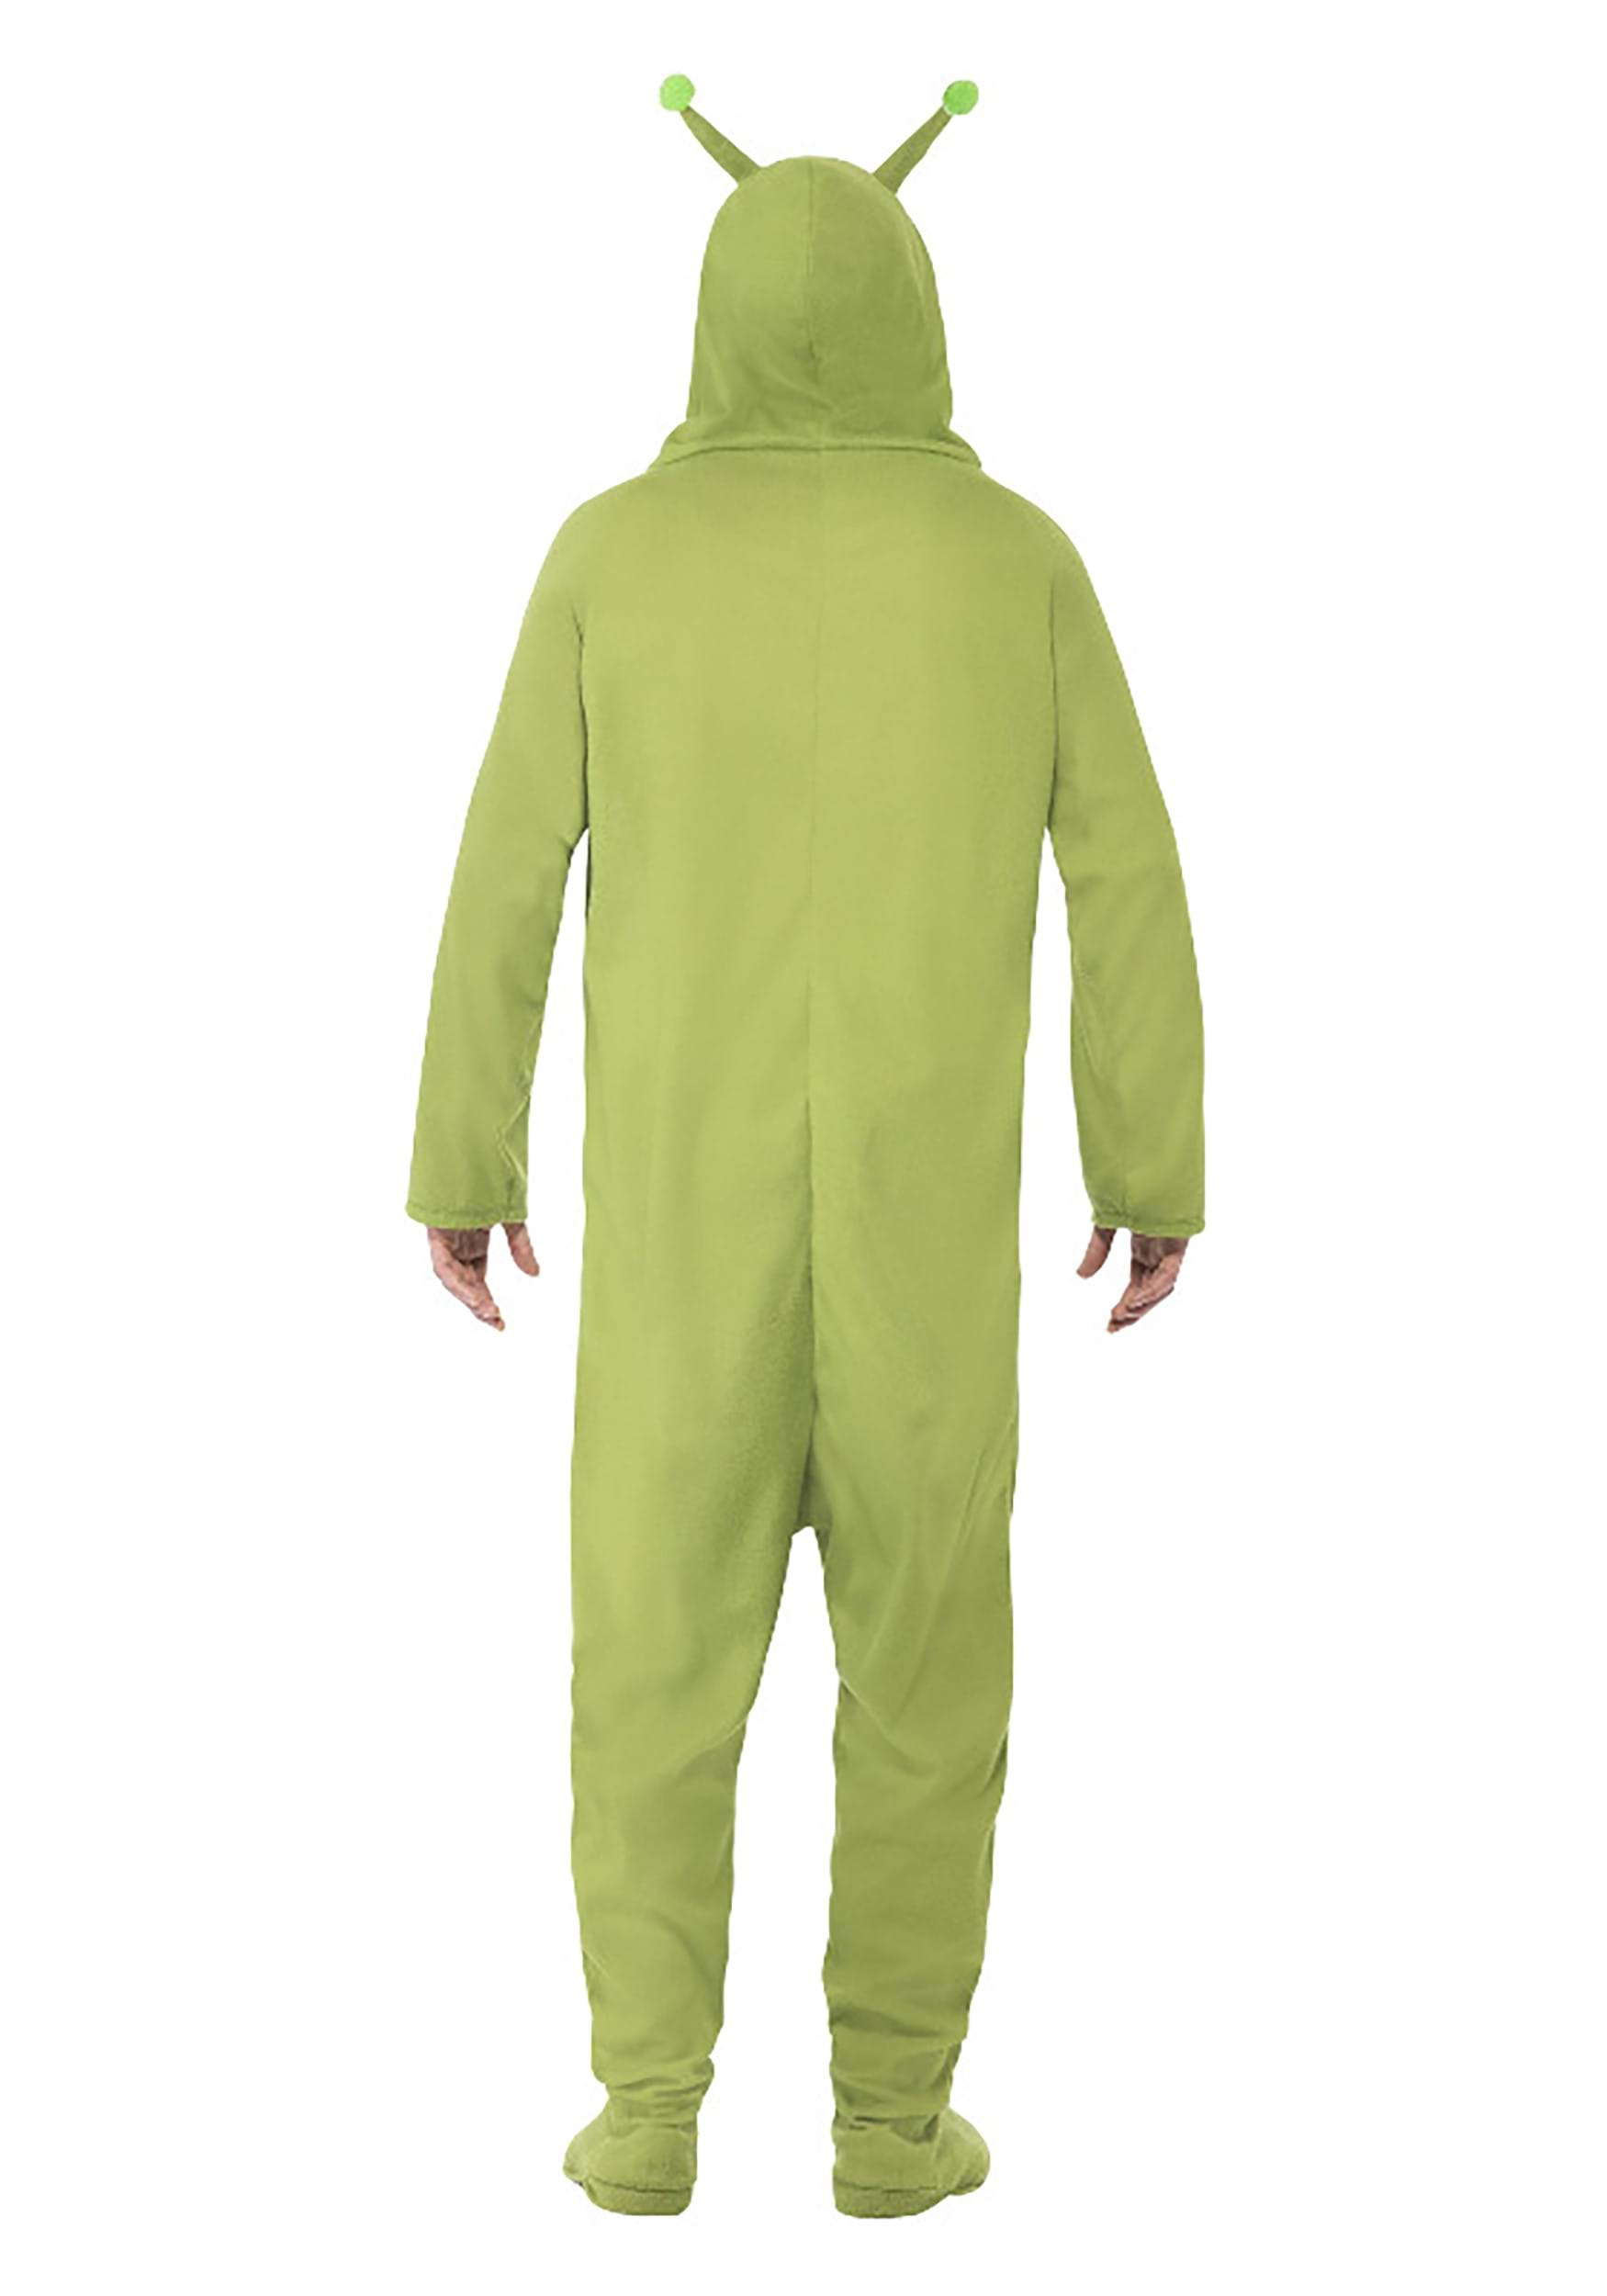 Green Alien Adult Jumpsuit Costume